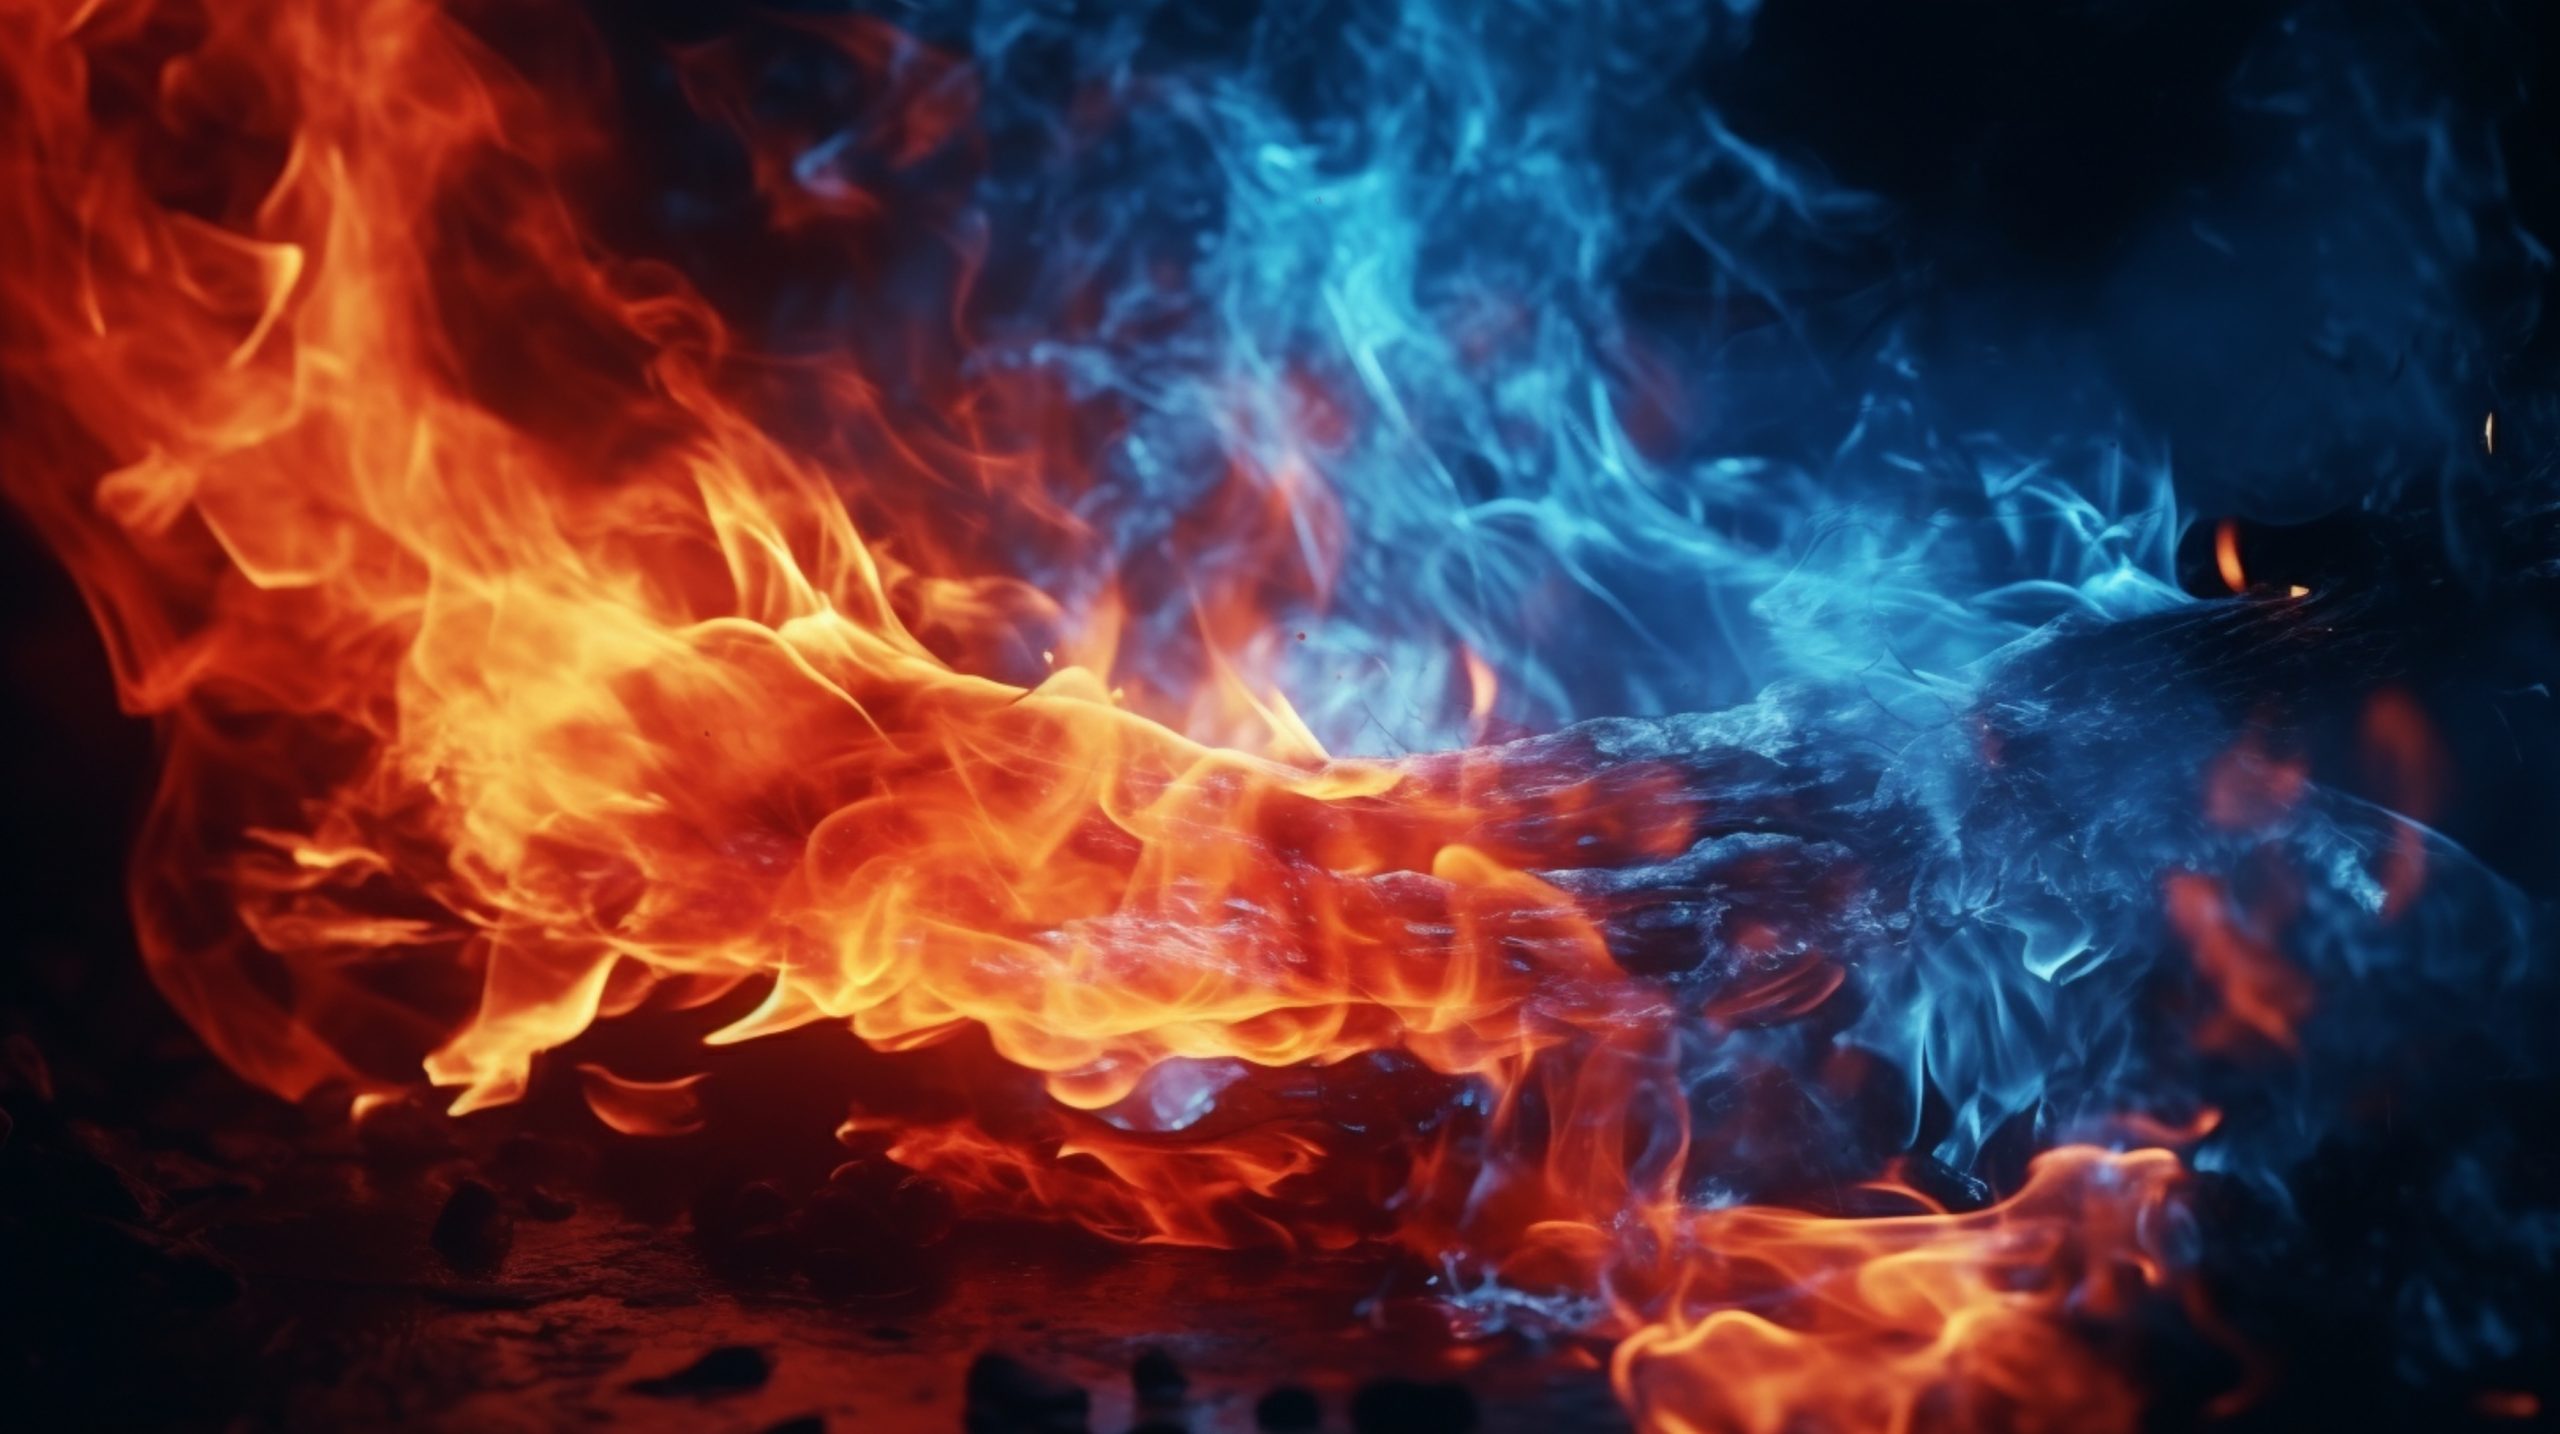 Torah: Black Fire on White Fire